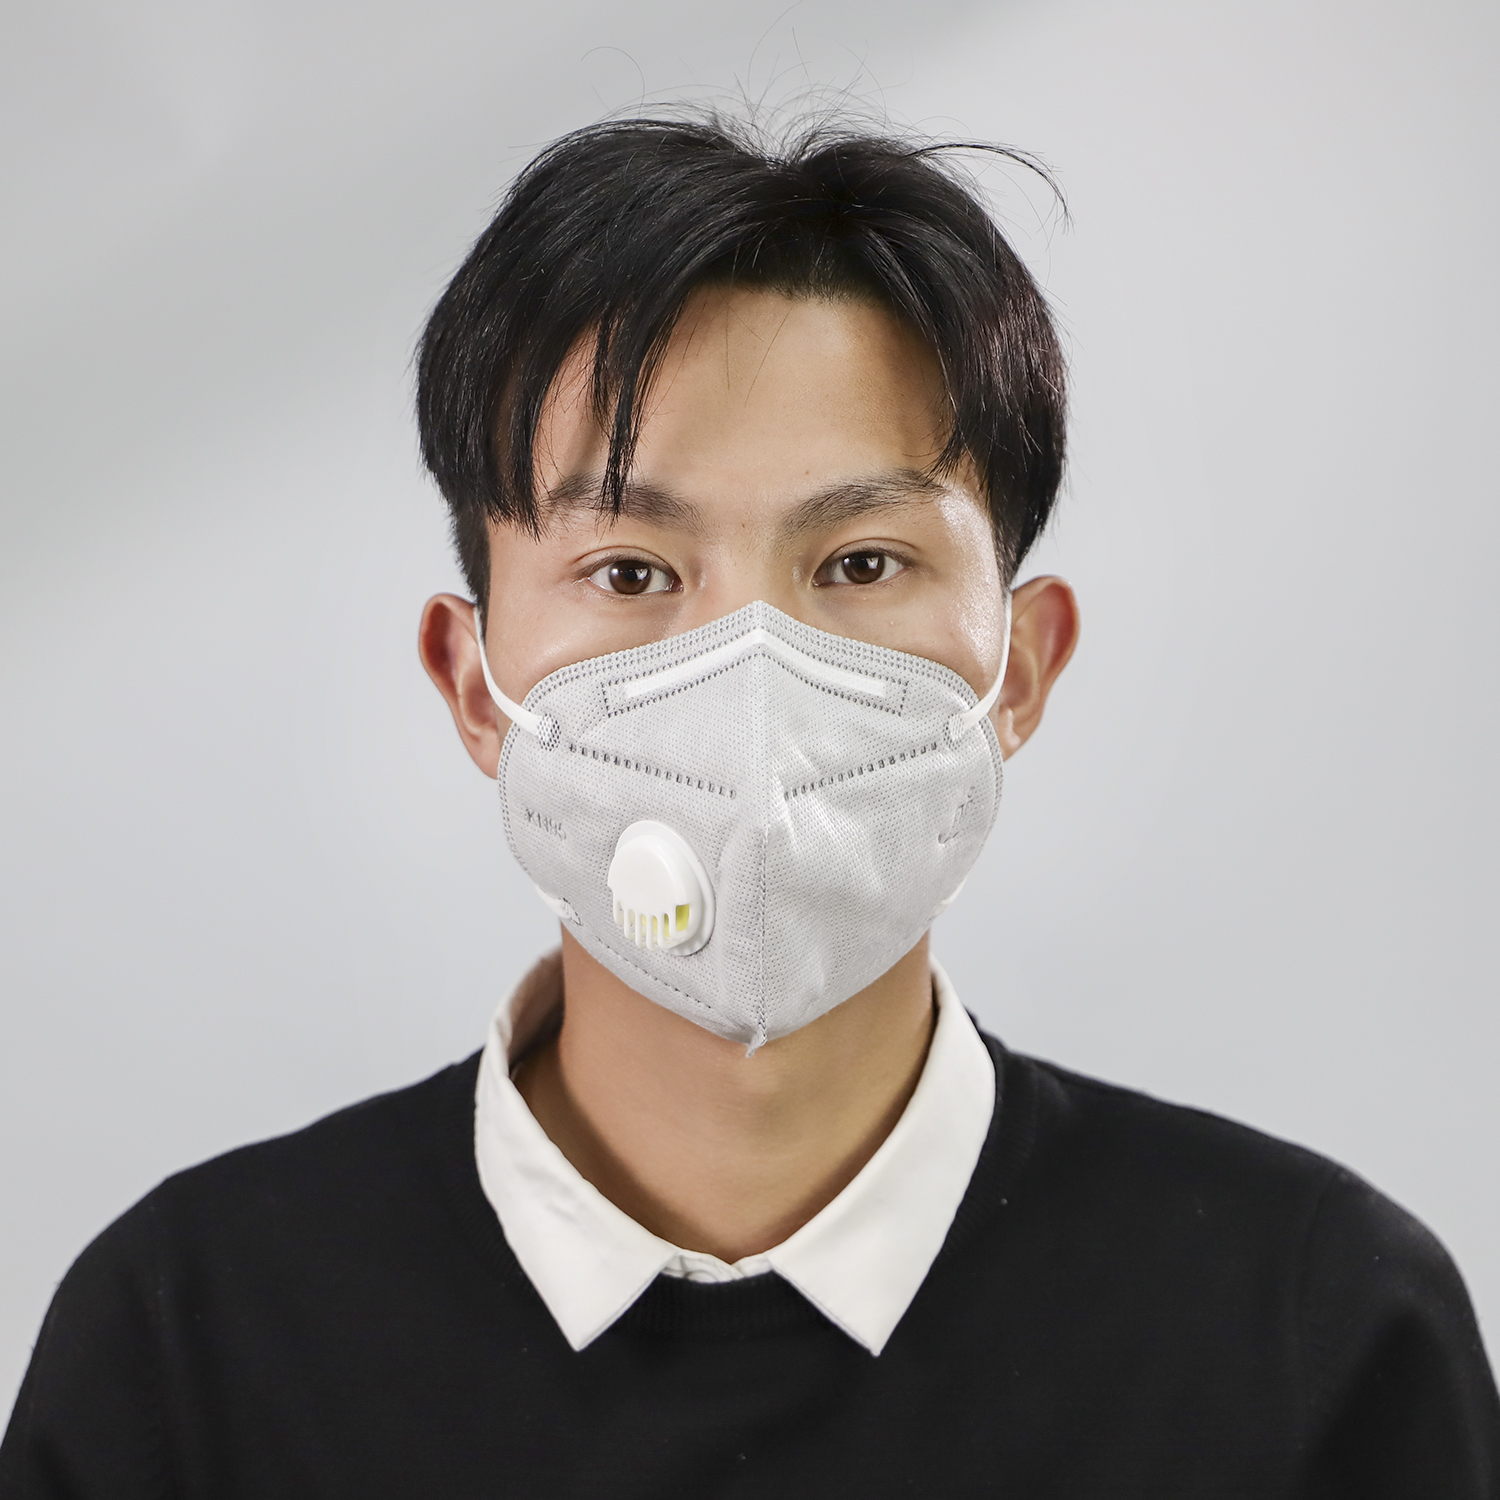 Kn95 Mask Coronavirus COVID-19 Mouth Face Protection Mask Bulk Purchase Available